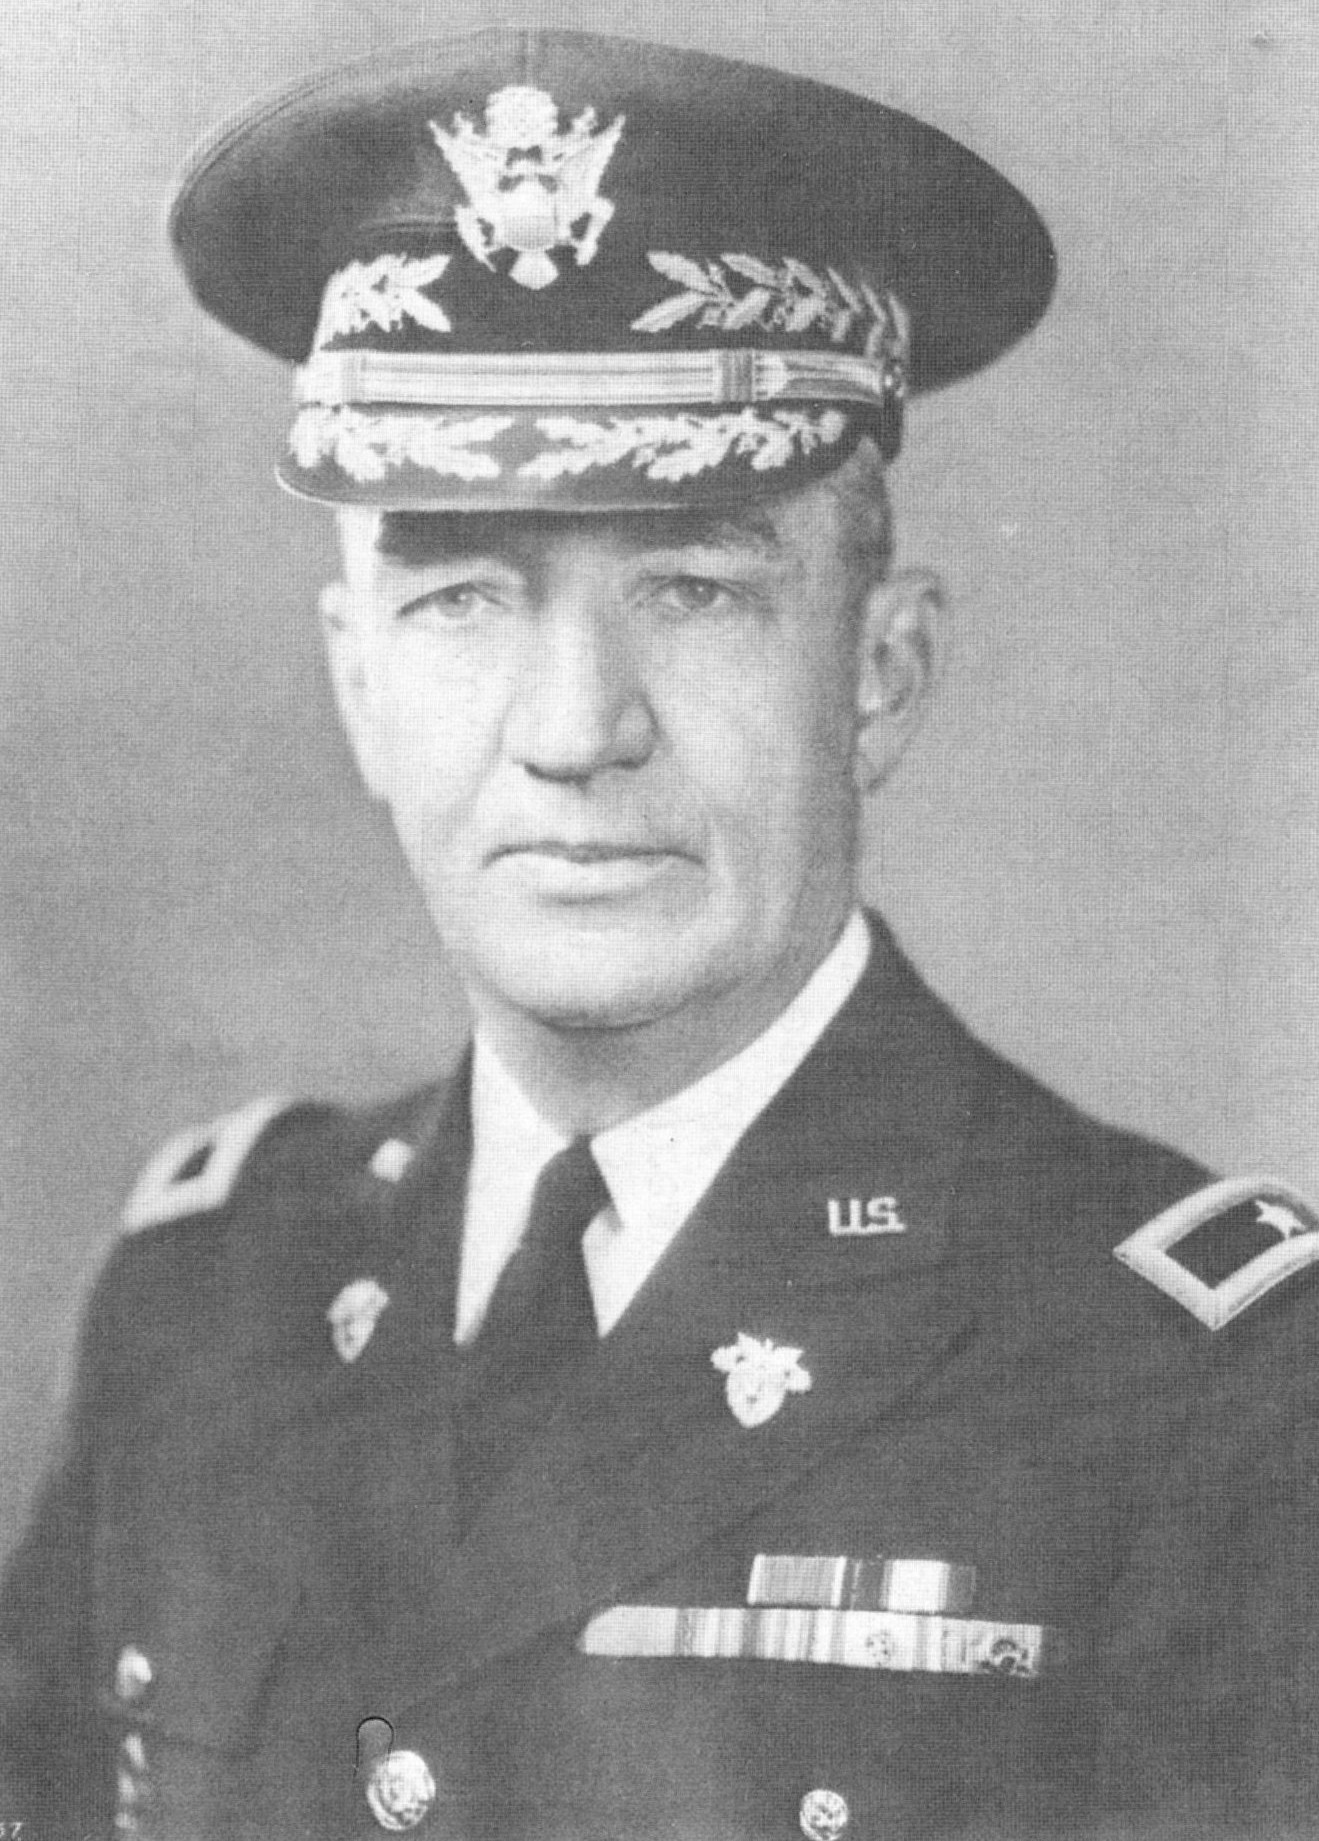 Portrait of Major General Robert Eichelberger, Aug 1941